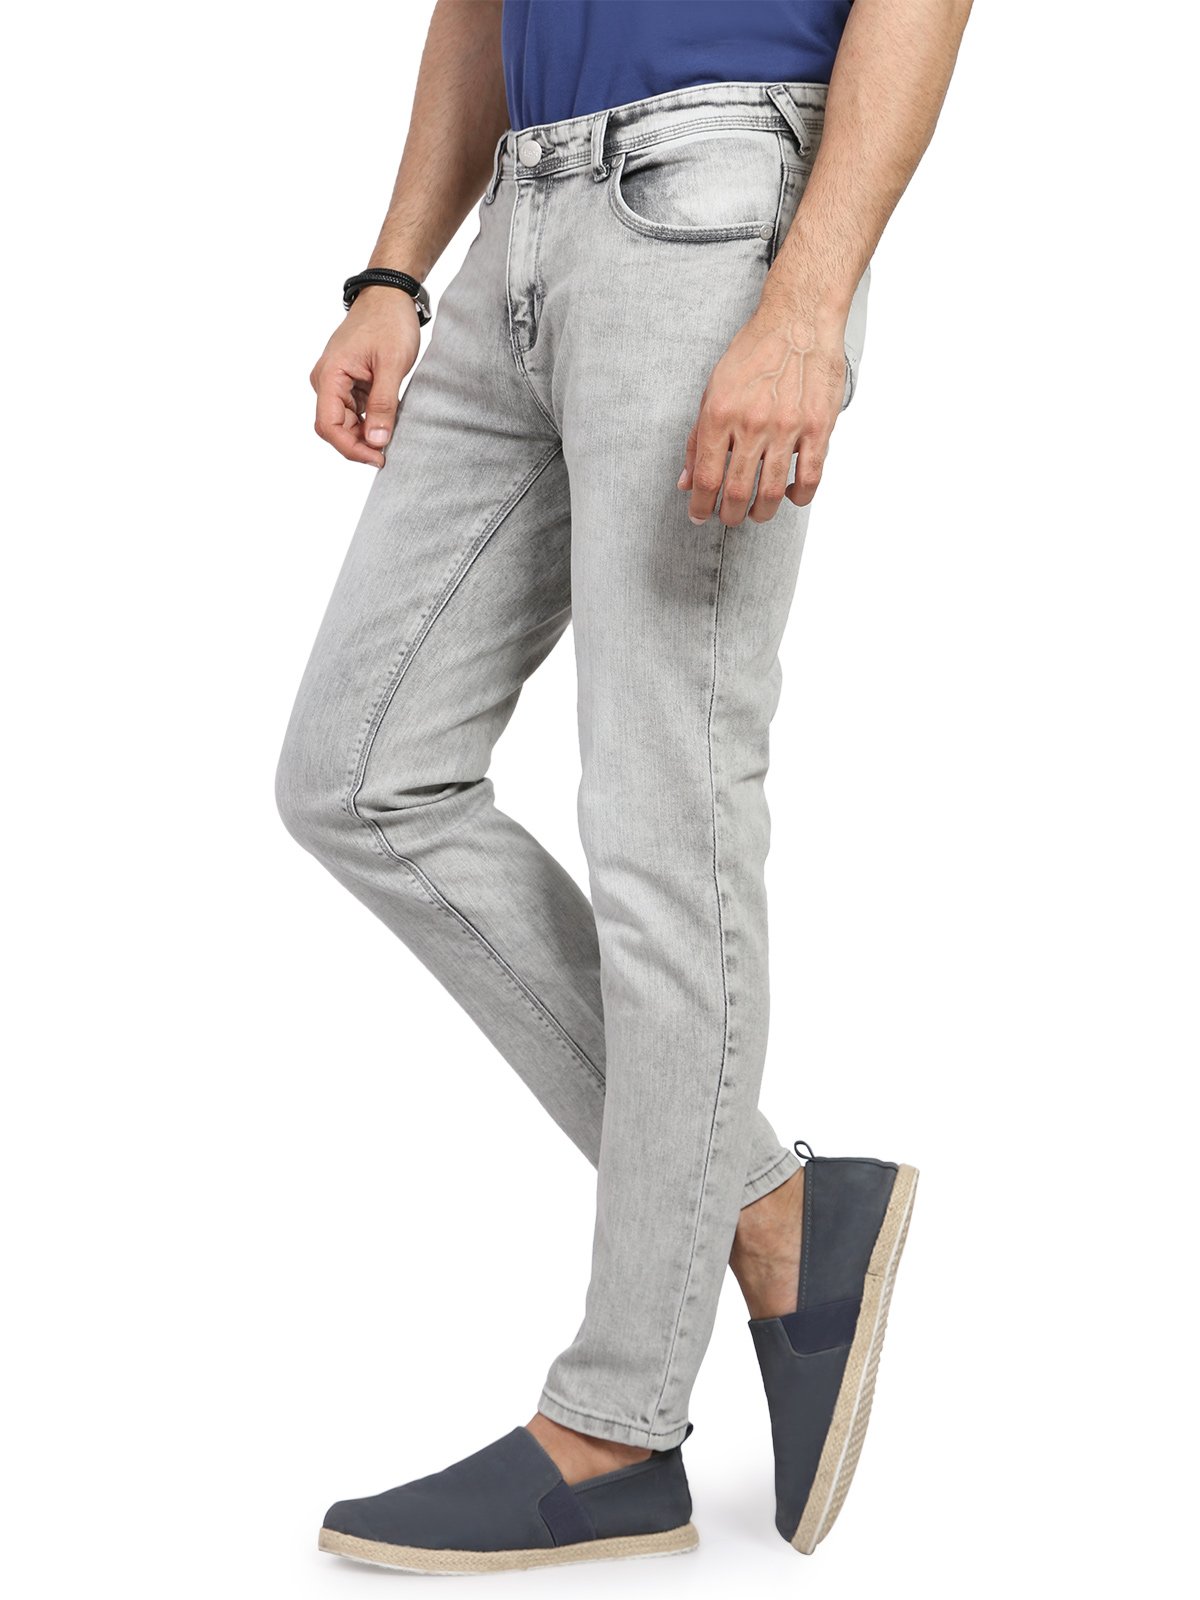 Men's Ash Grey Denim Jeans - FMBP19-093